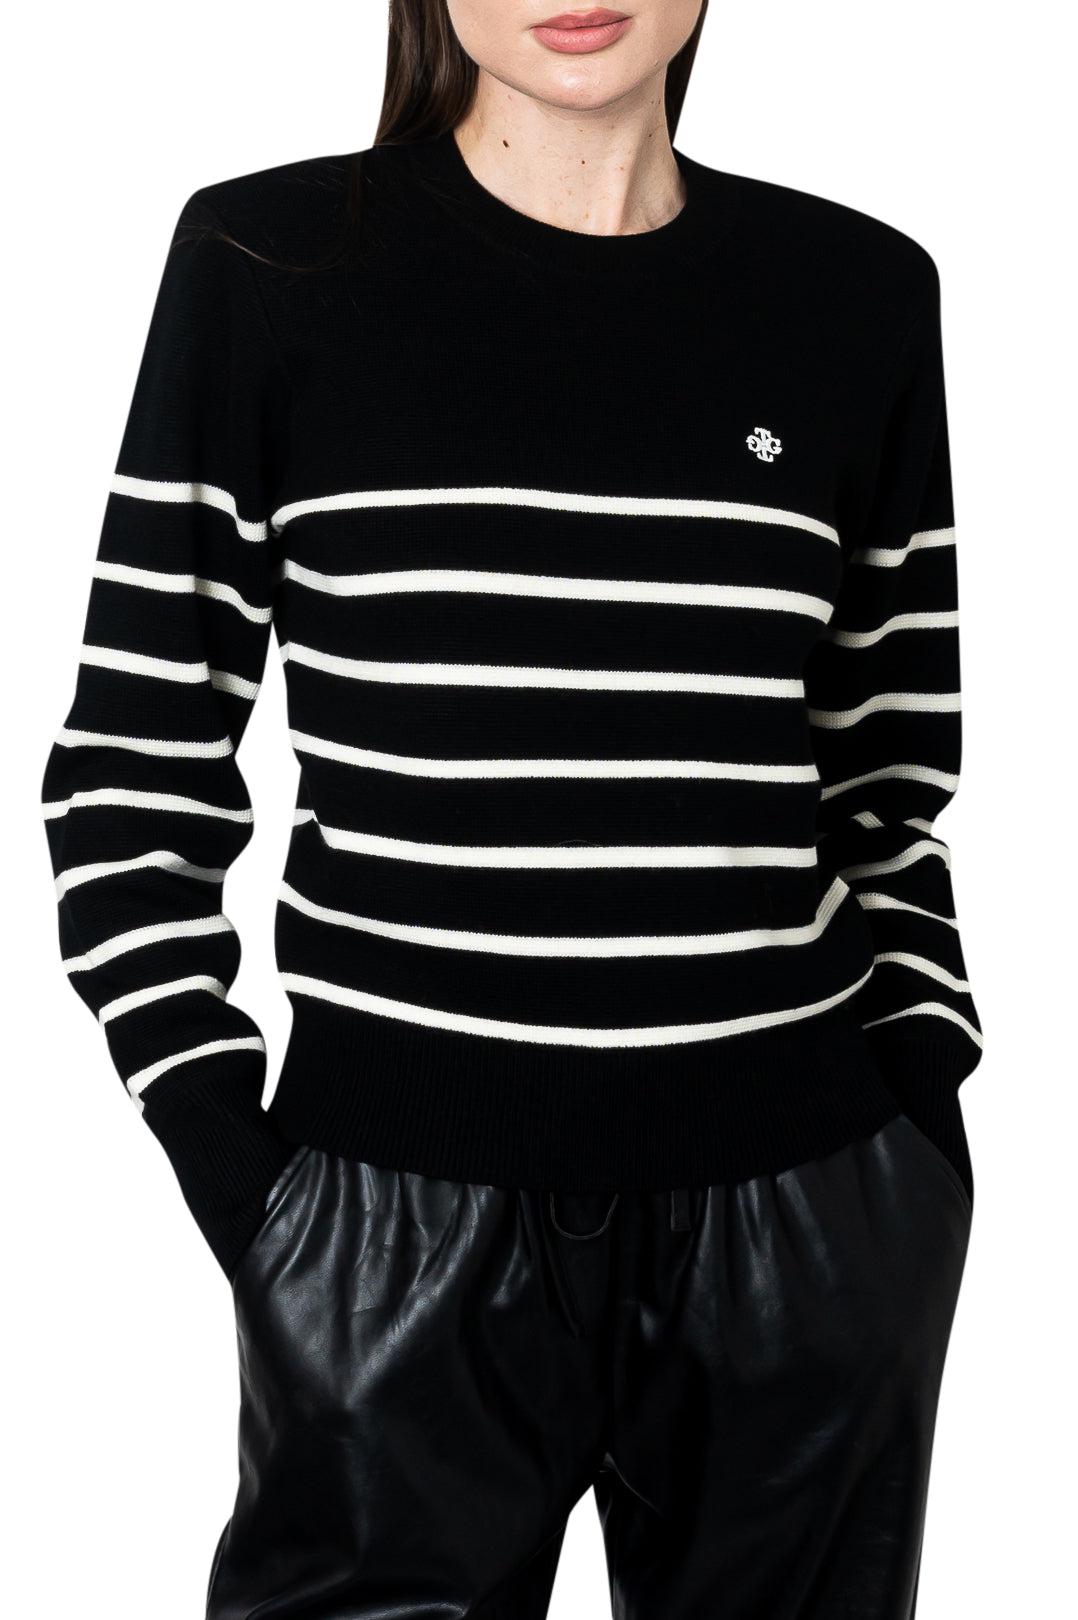 The Garment-Striped merino wool sweater-18447-950-dgallerystore